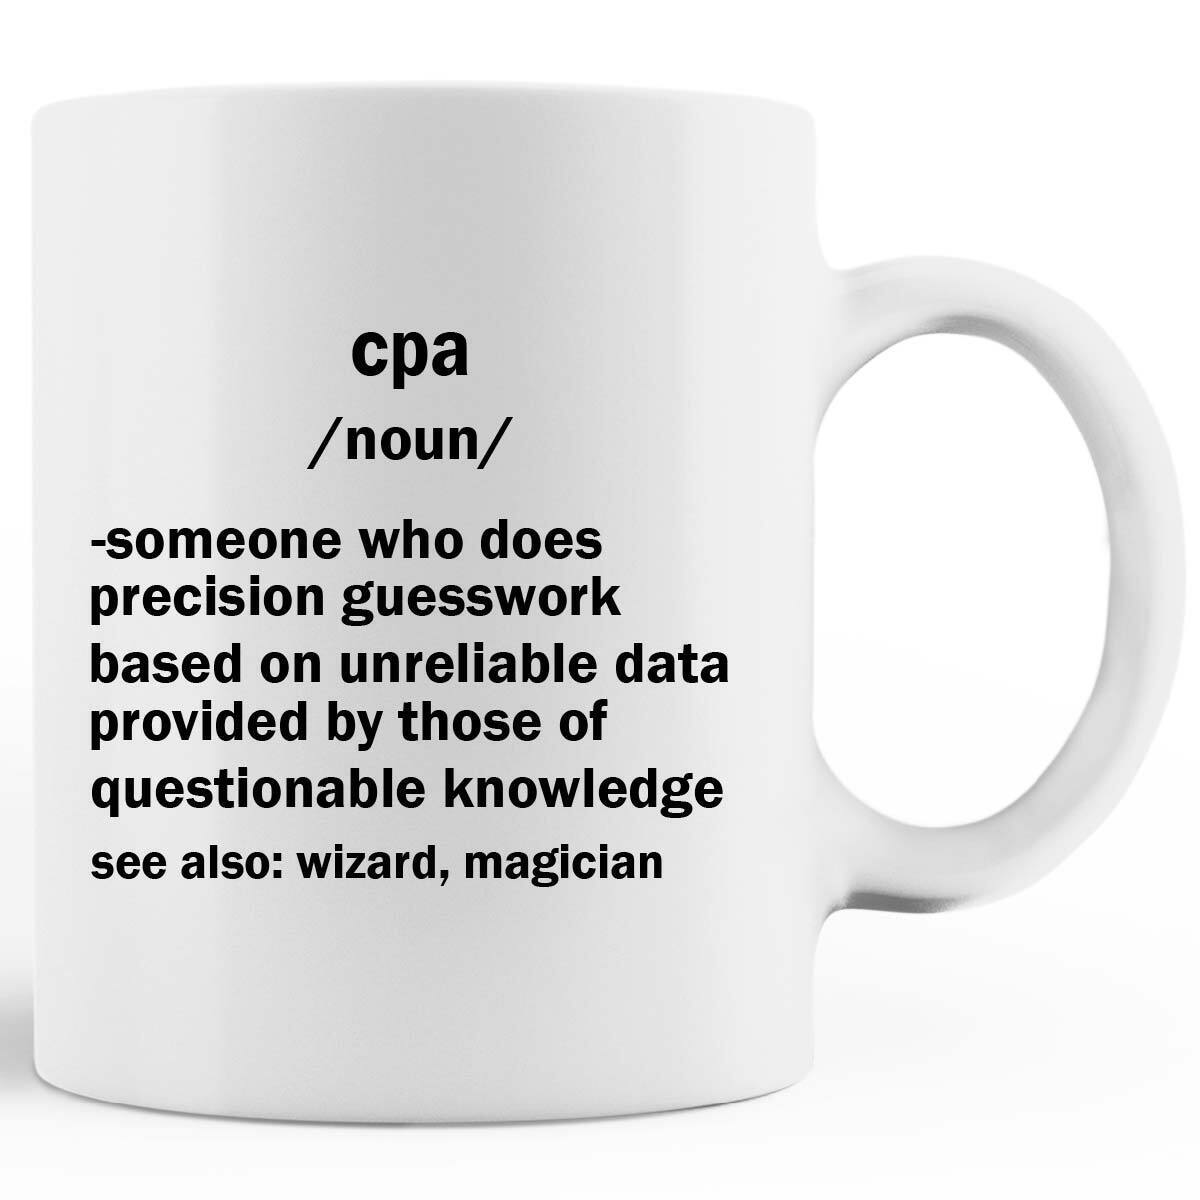 cpa Definition Coffee Mug gift for him birthday MUG 11oz 15oz